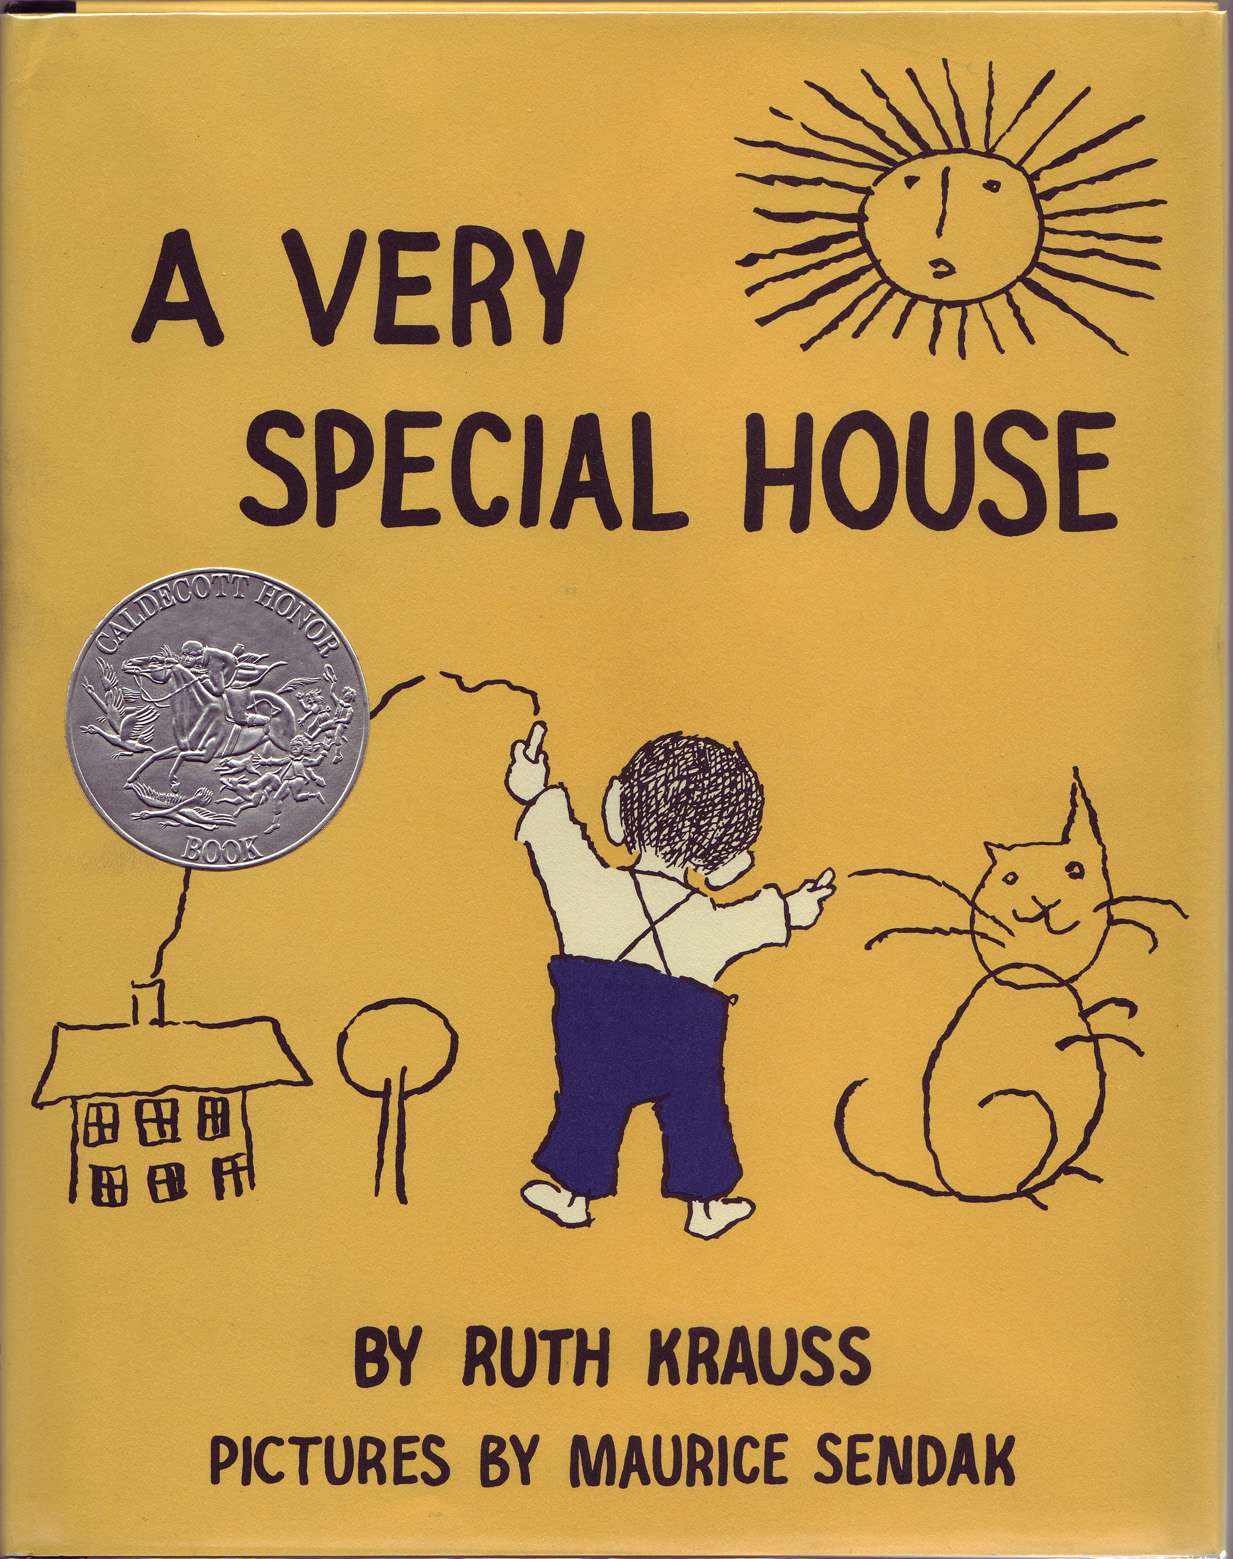 Ruth Krauss and Maurice Sendak, A Very Special House (1953)